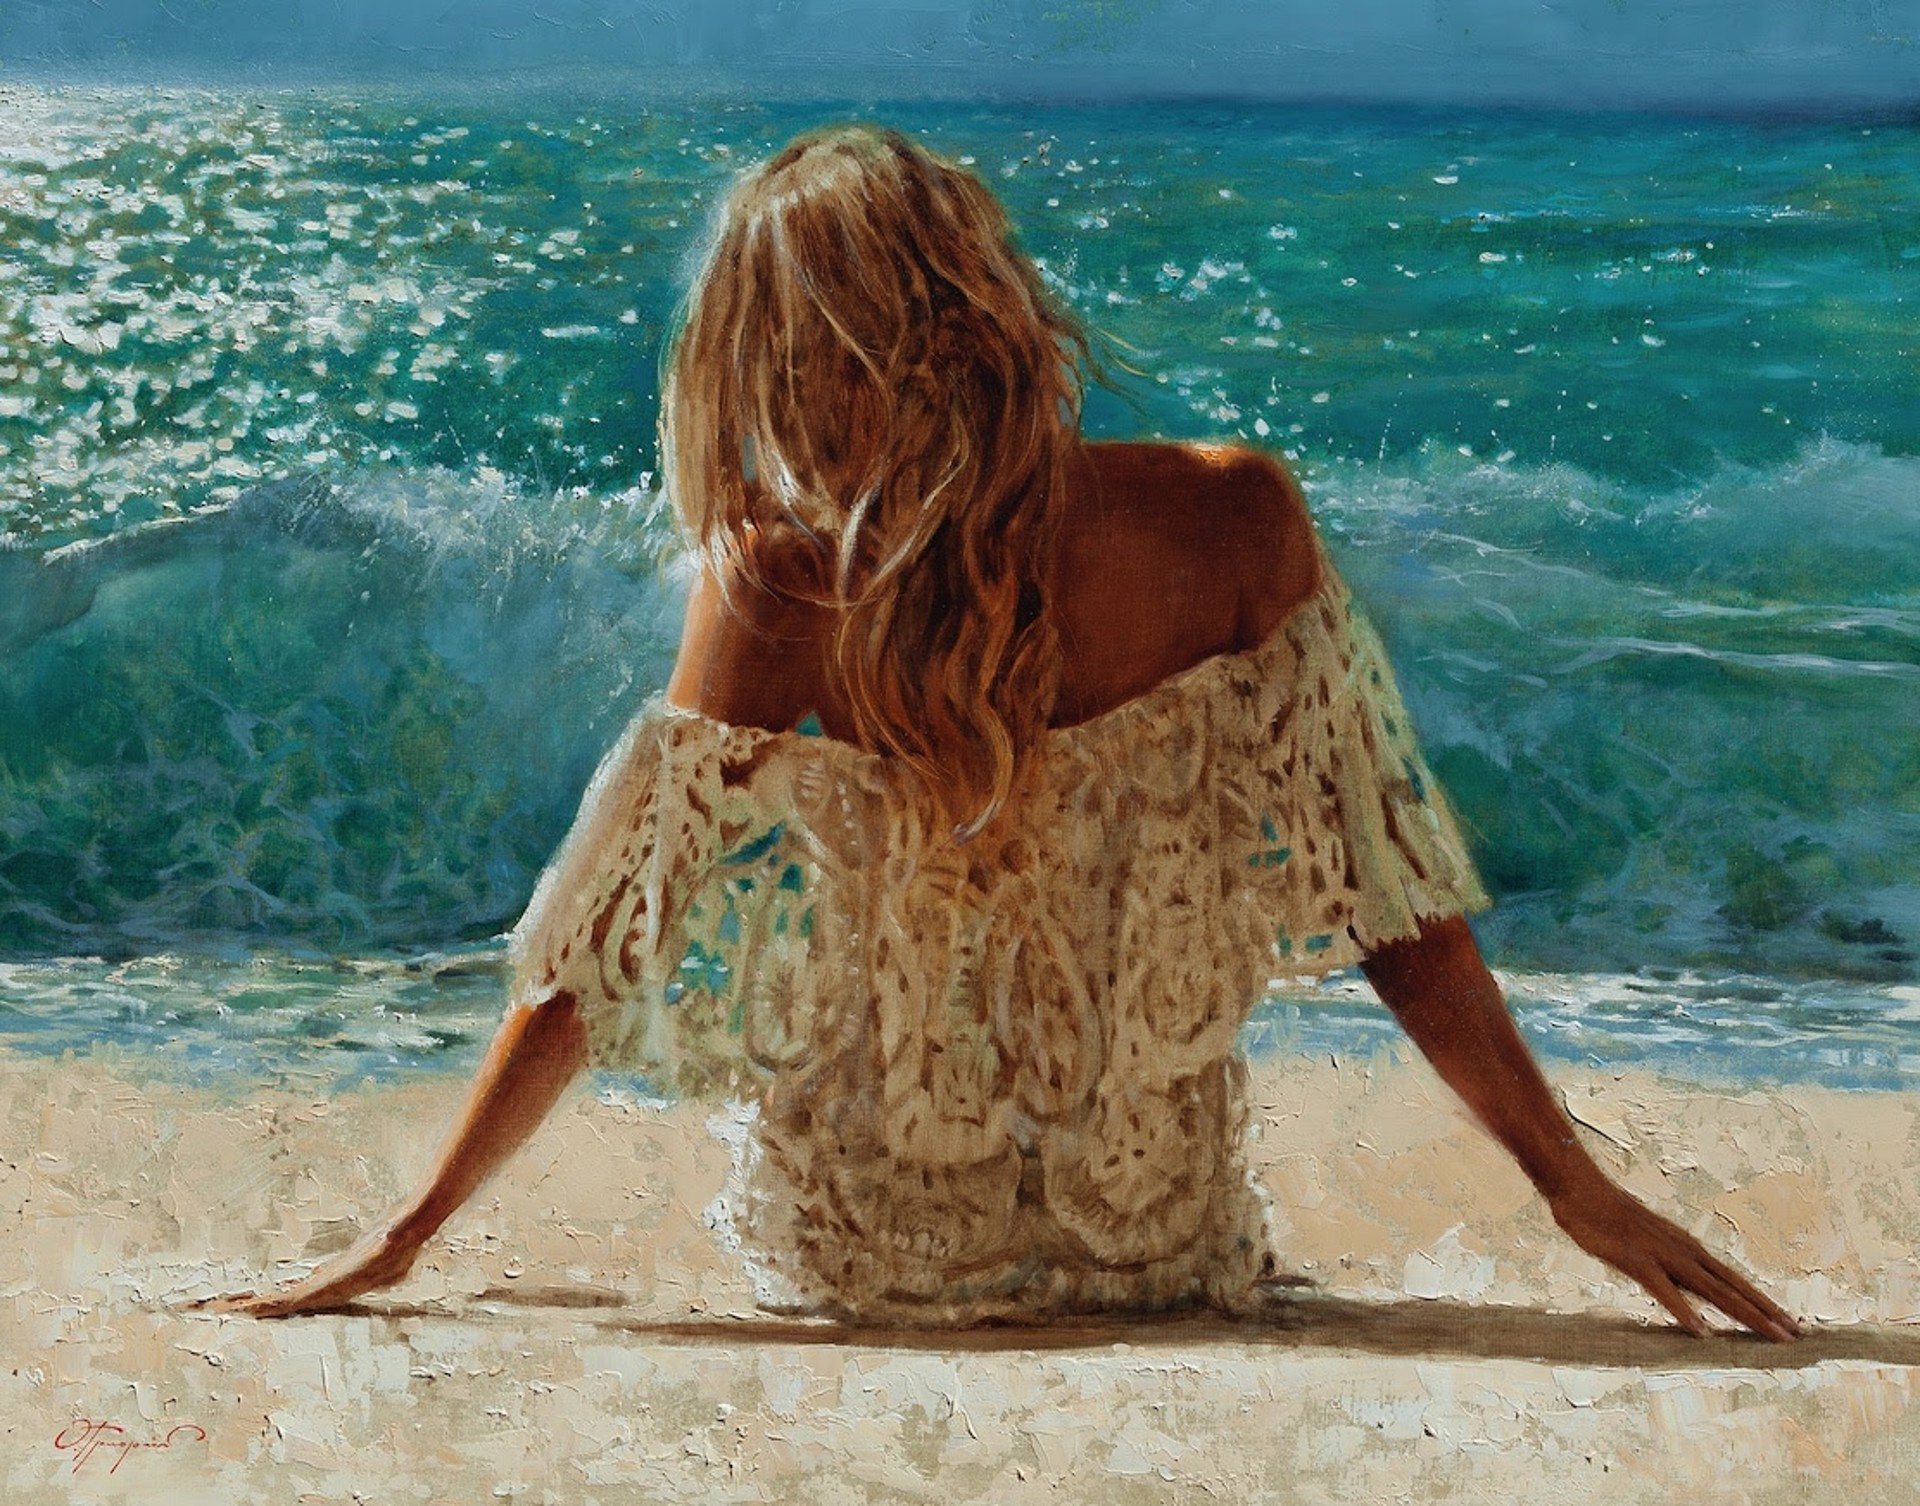 "Relax on the Beach" by Oleg Trofimov